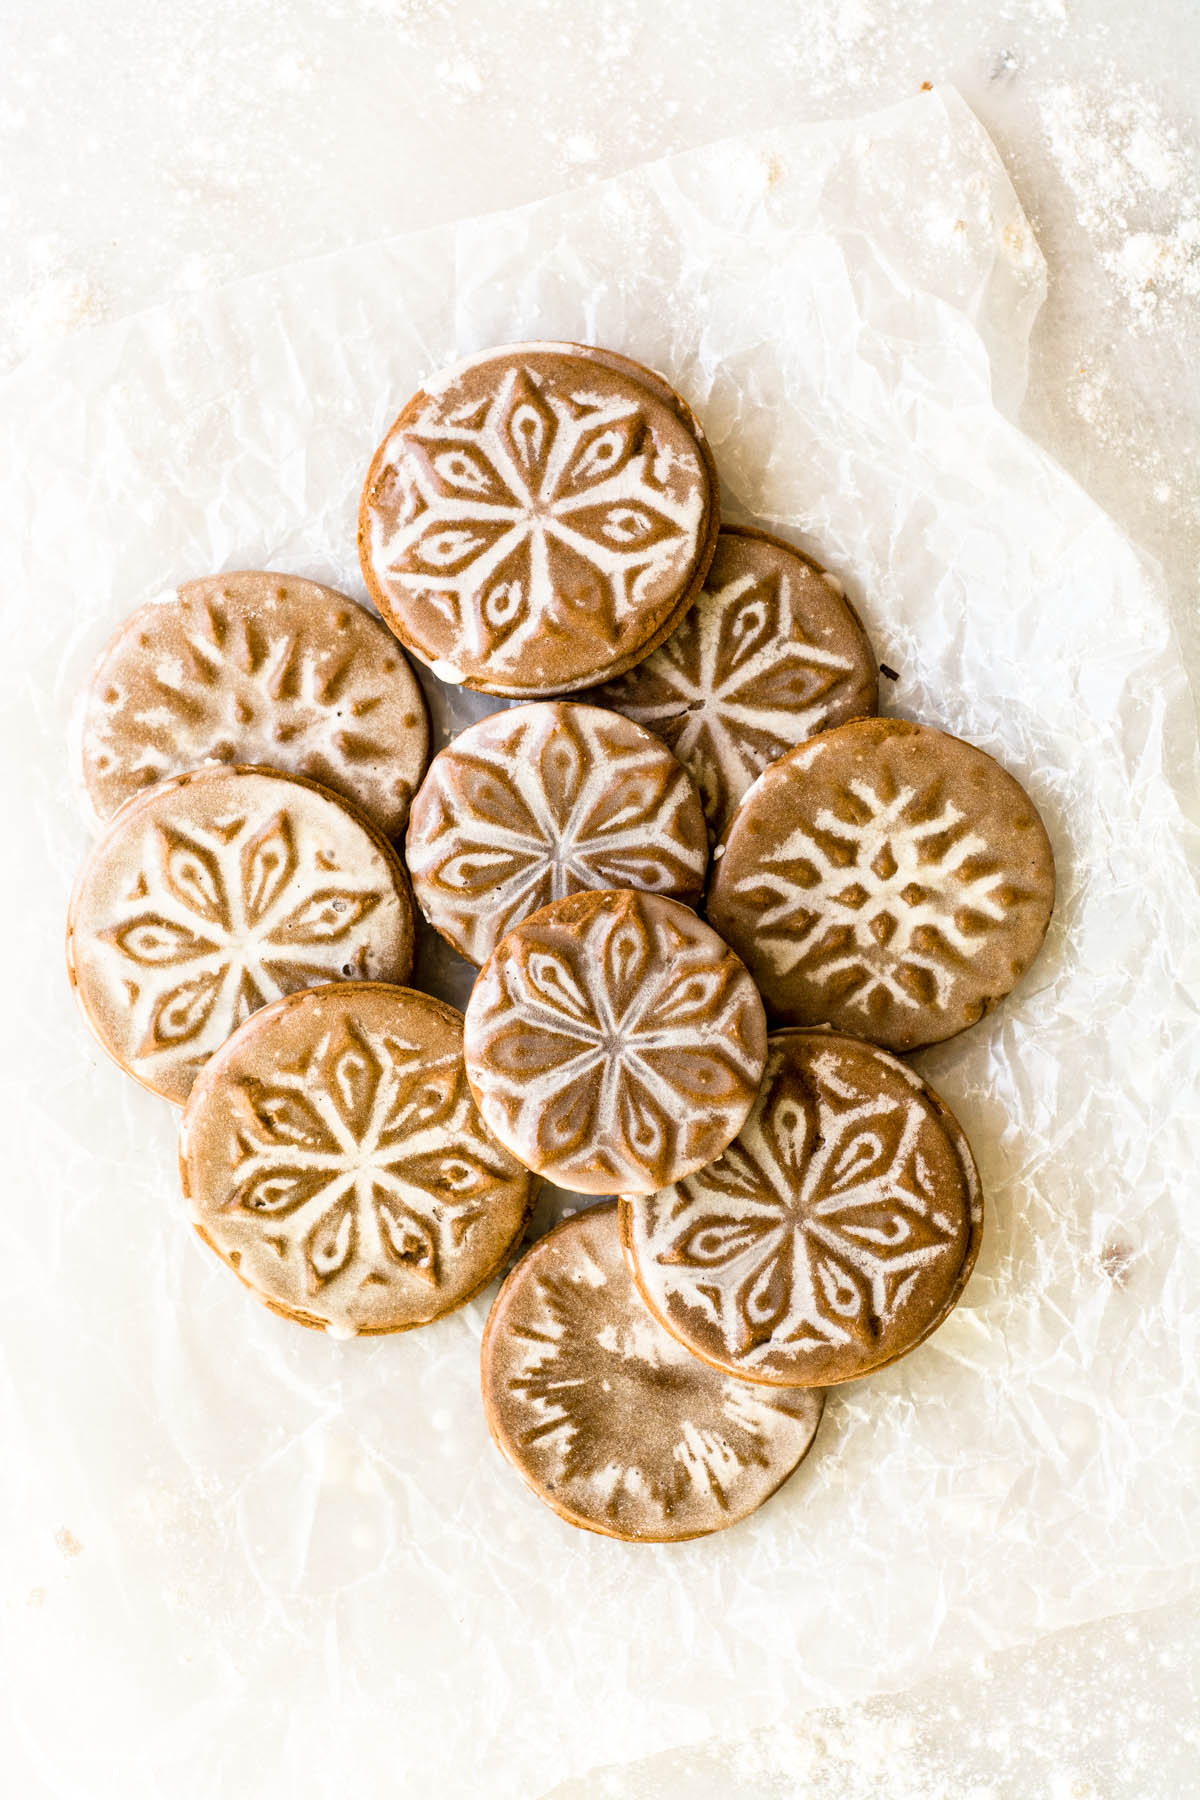 10 Yummy Gingerbread Cookies